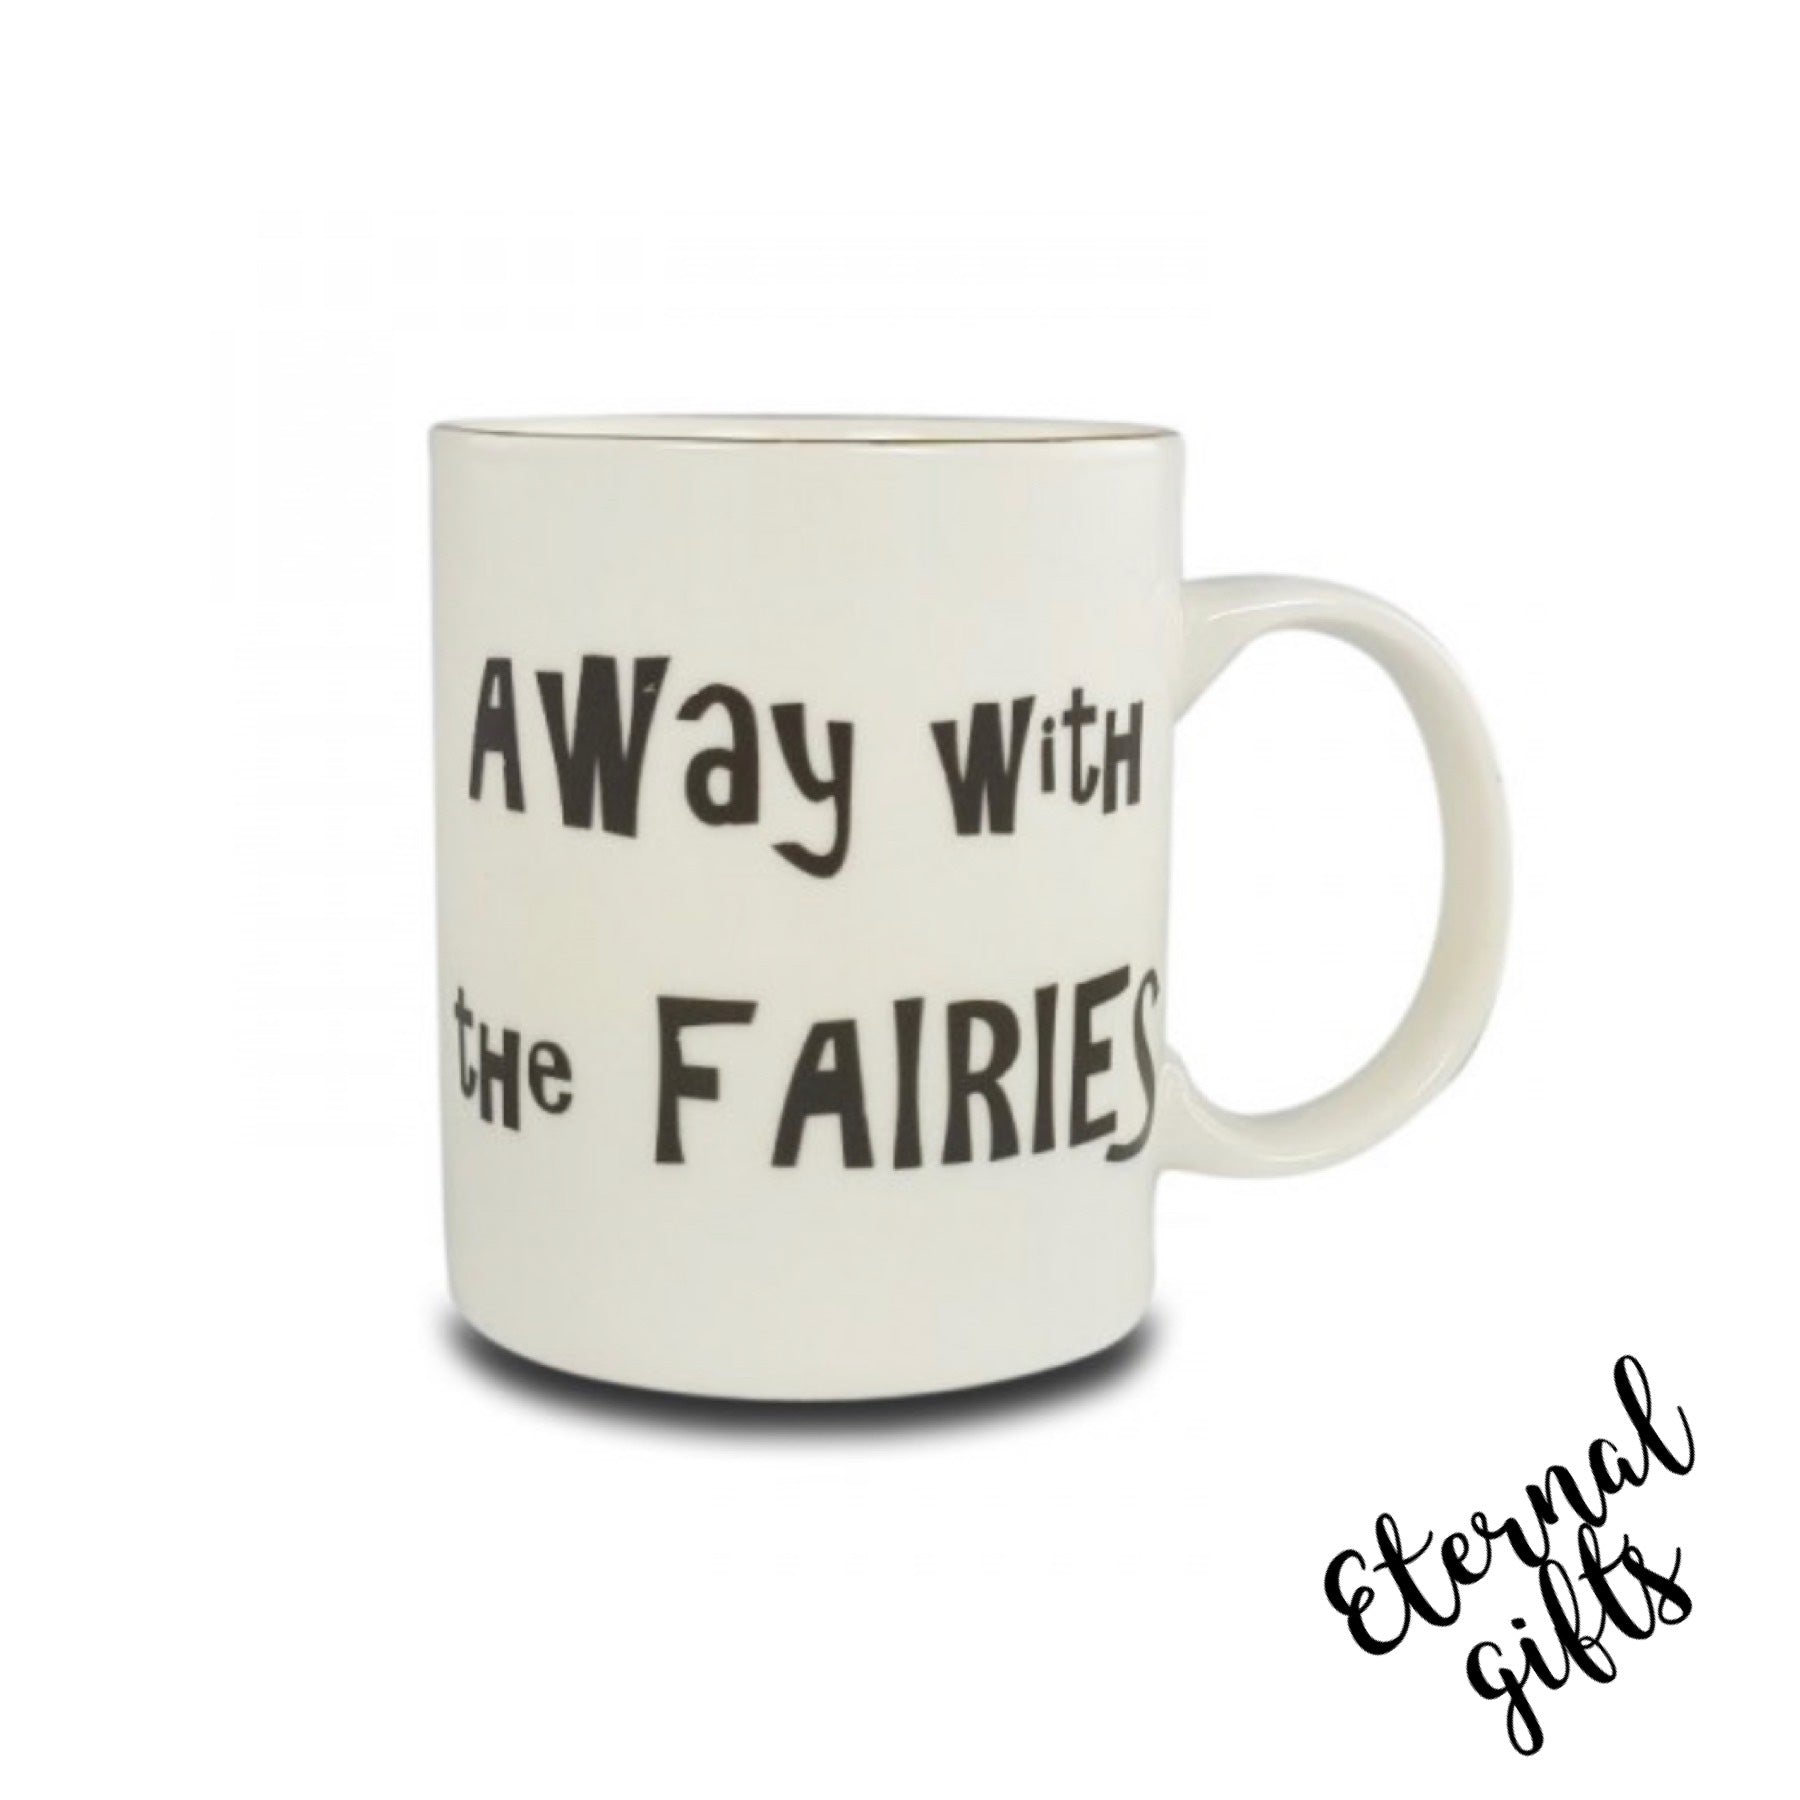 Away with the fairies Mug - Shannonbridge Pottery